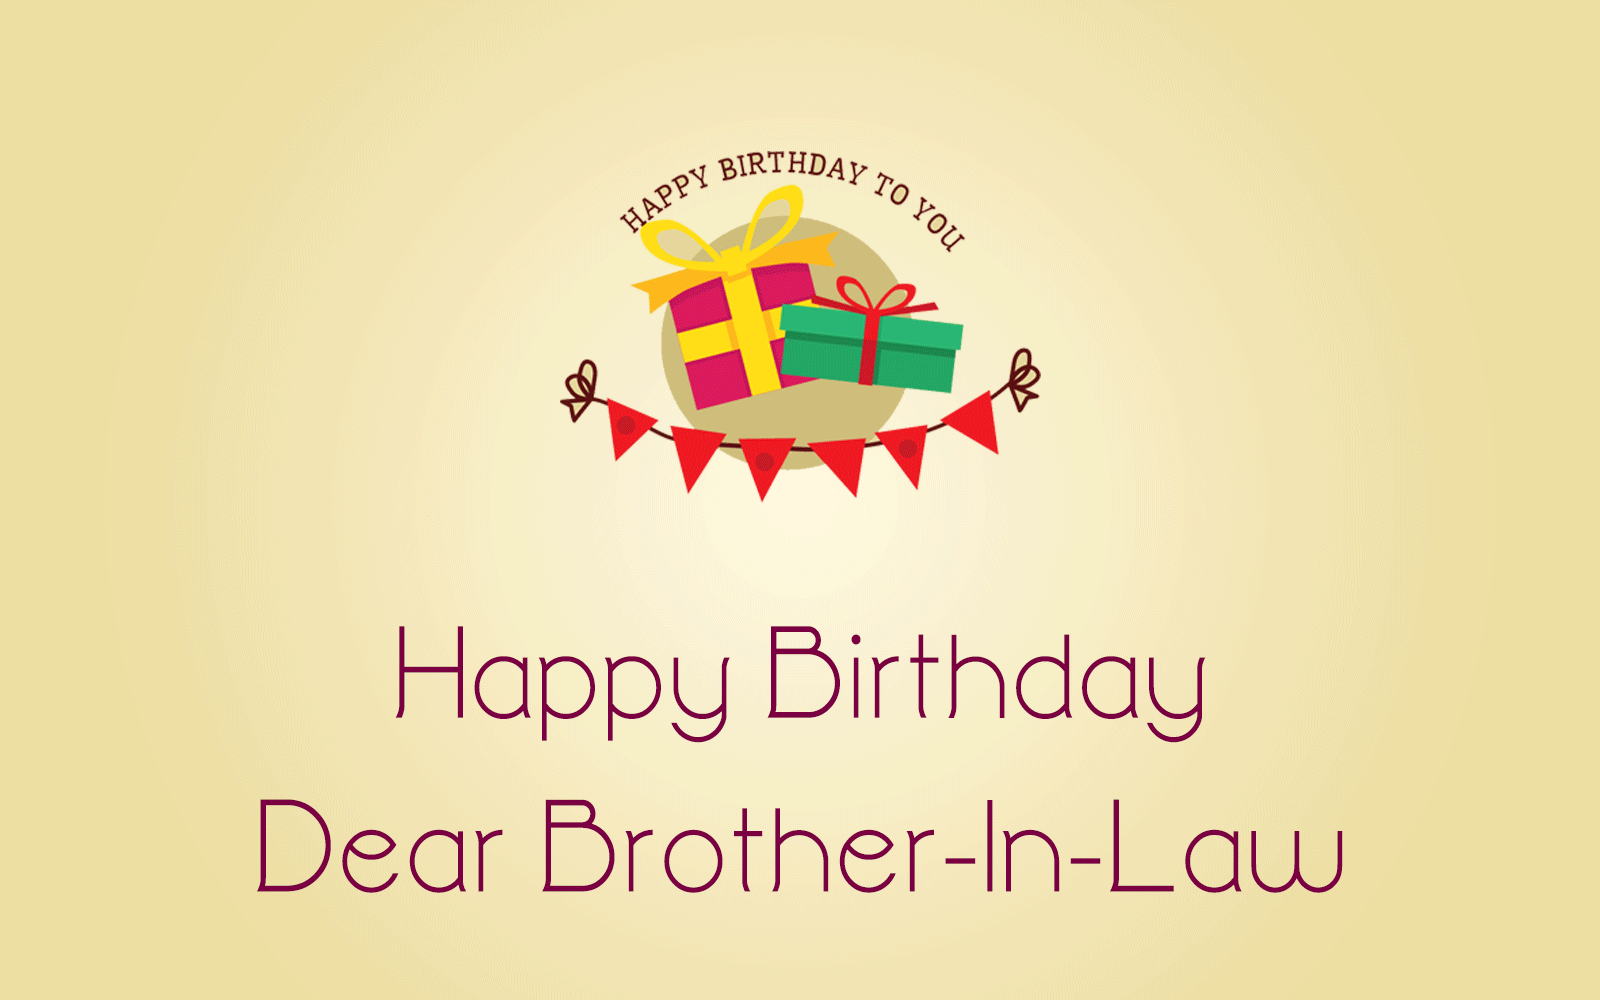 Happy Birthday Dear Brother-in-law GIF | GIFDB.com